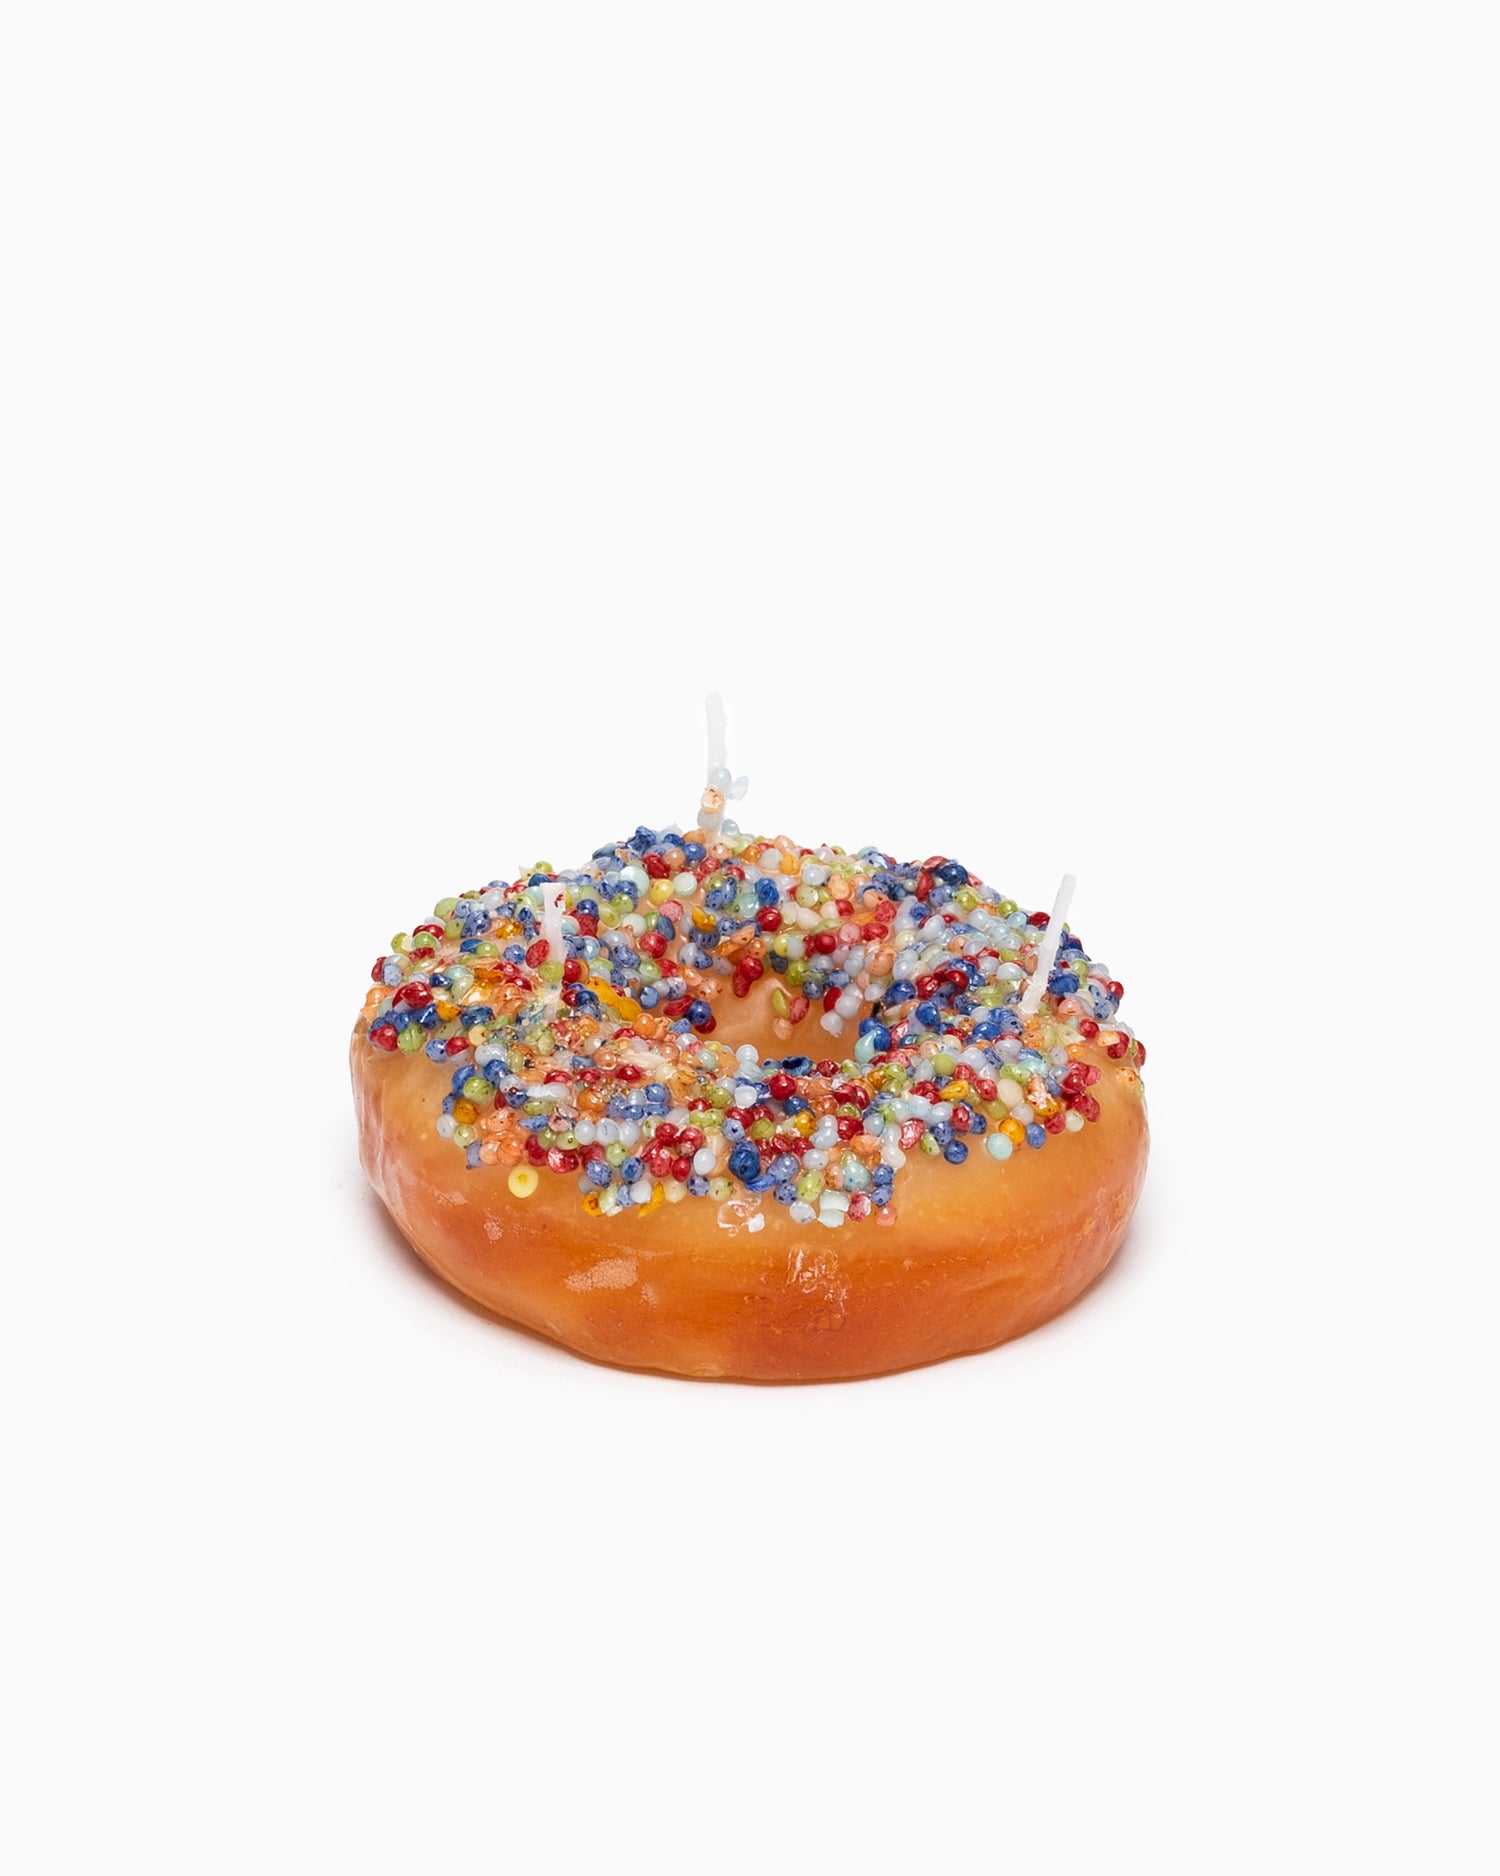 Donut Candle - Honey Glazed with Rainbow Sprinkles